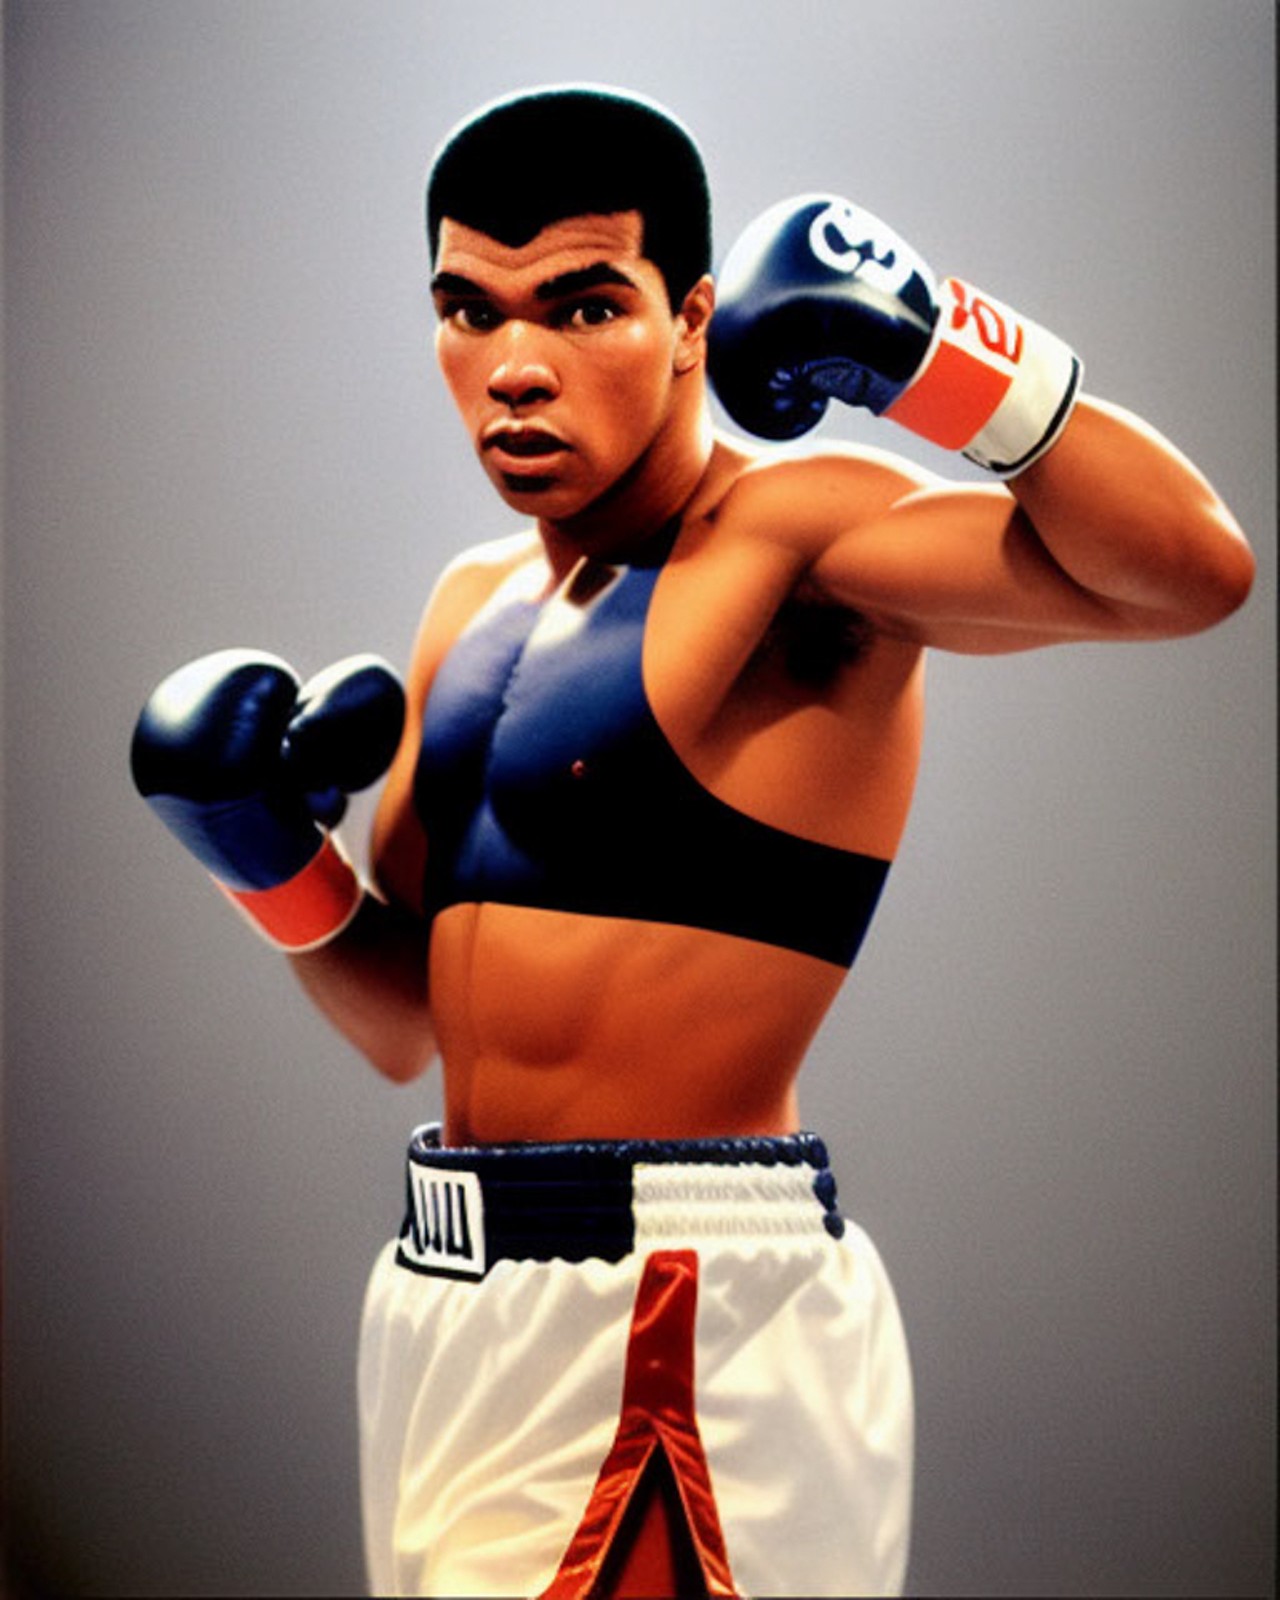 Prompt: "Muhammad Ali"